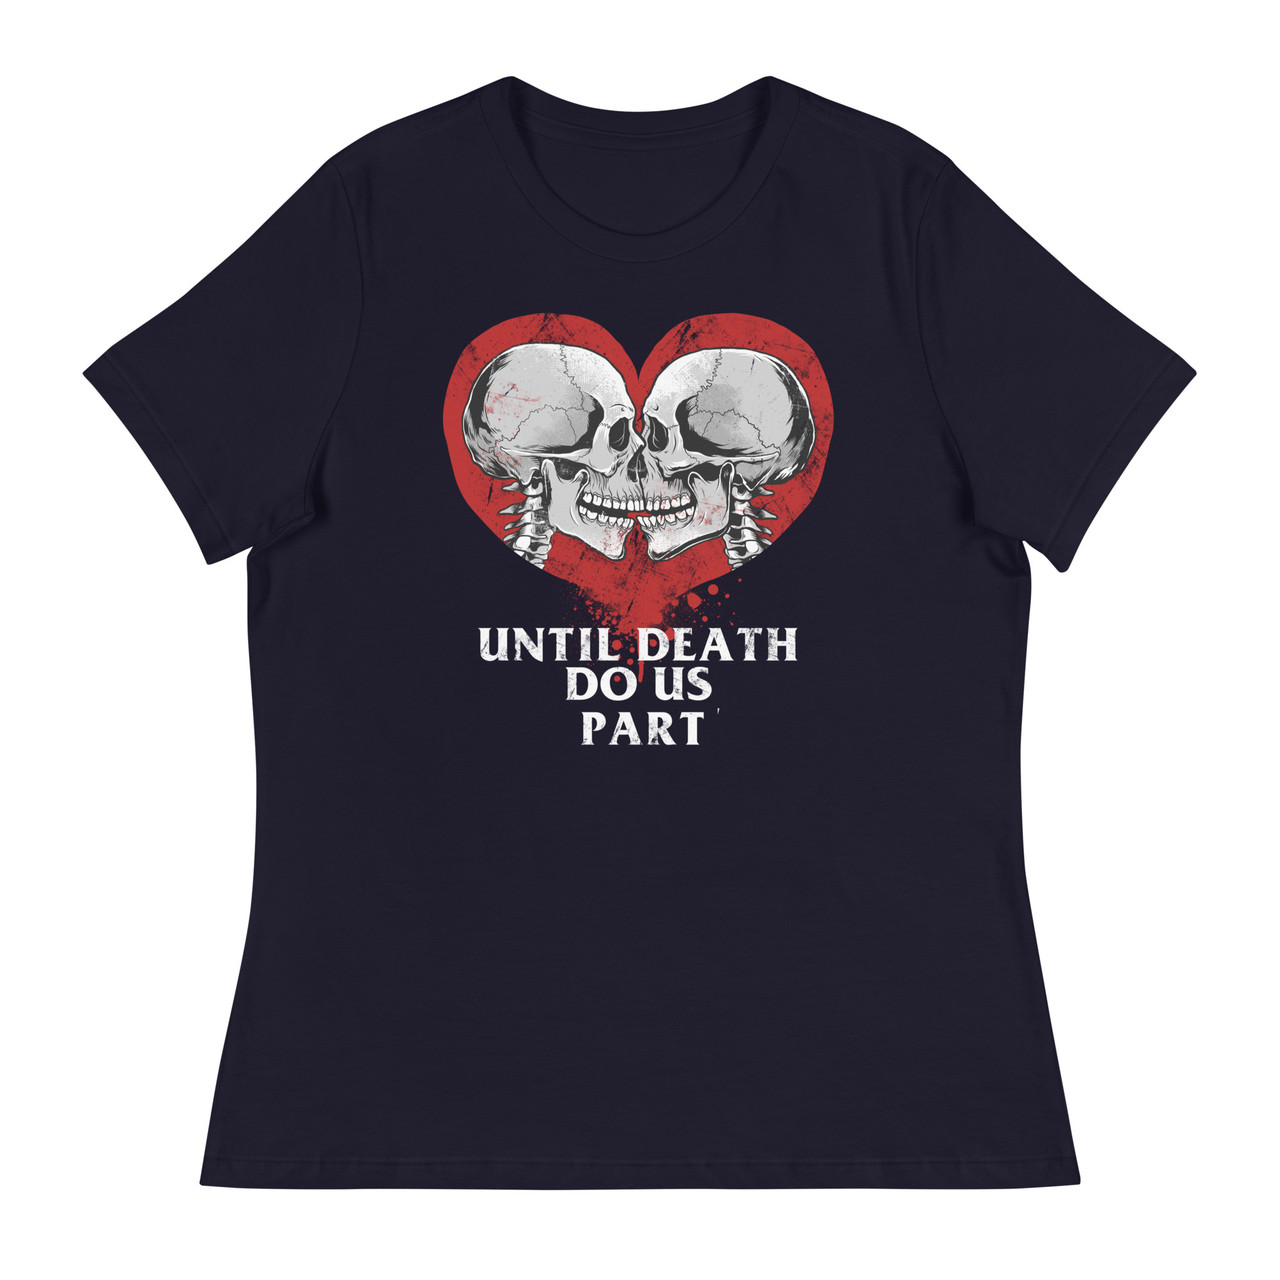 Until Death Do Us Part Women's Relaxed T-Shirt - Bella + Canvas 6400 